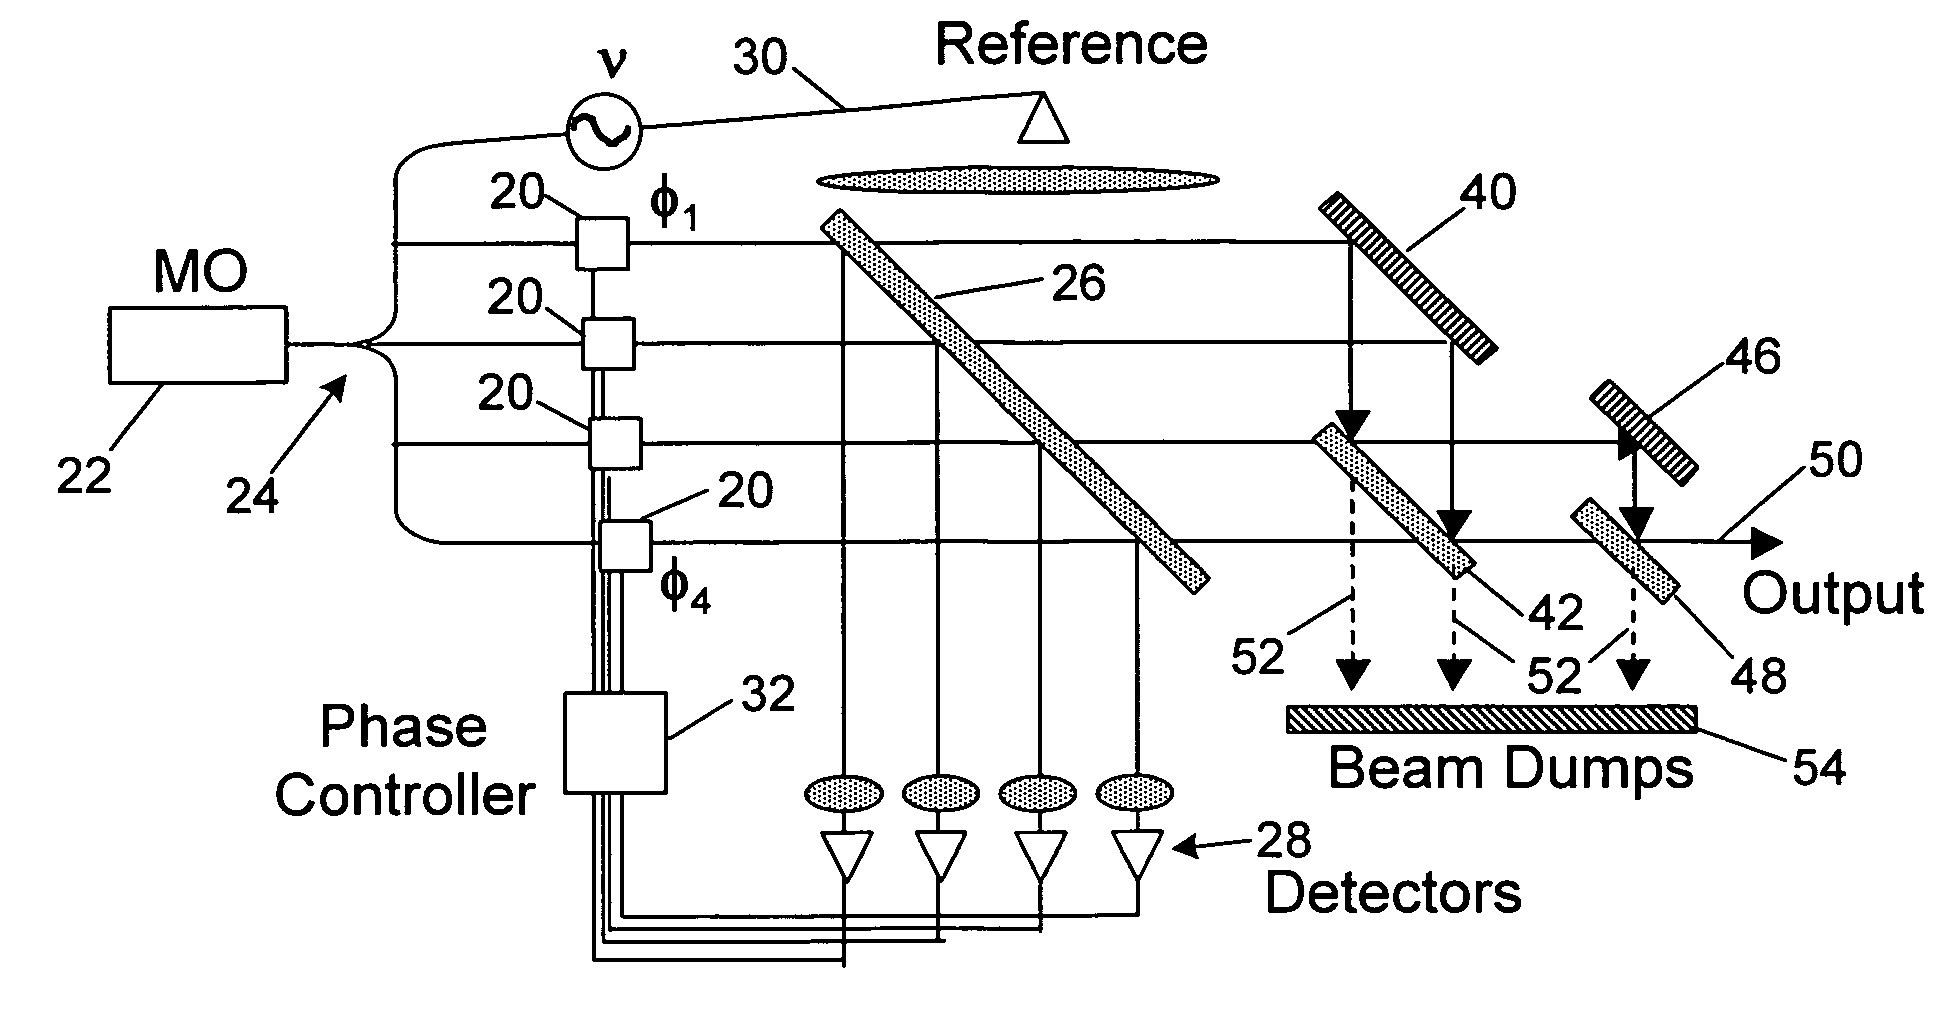 Interferometric beam combination